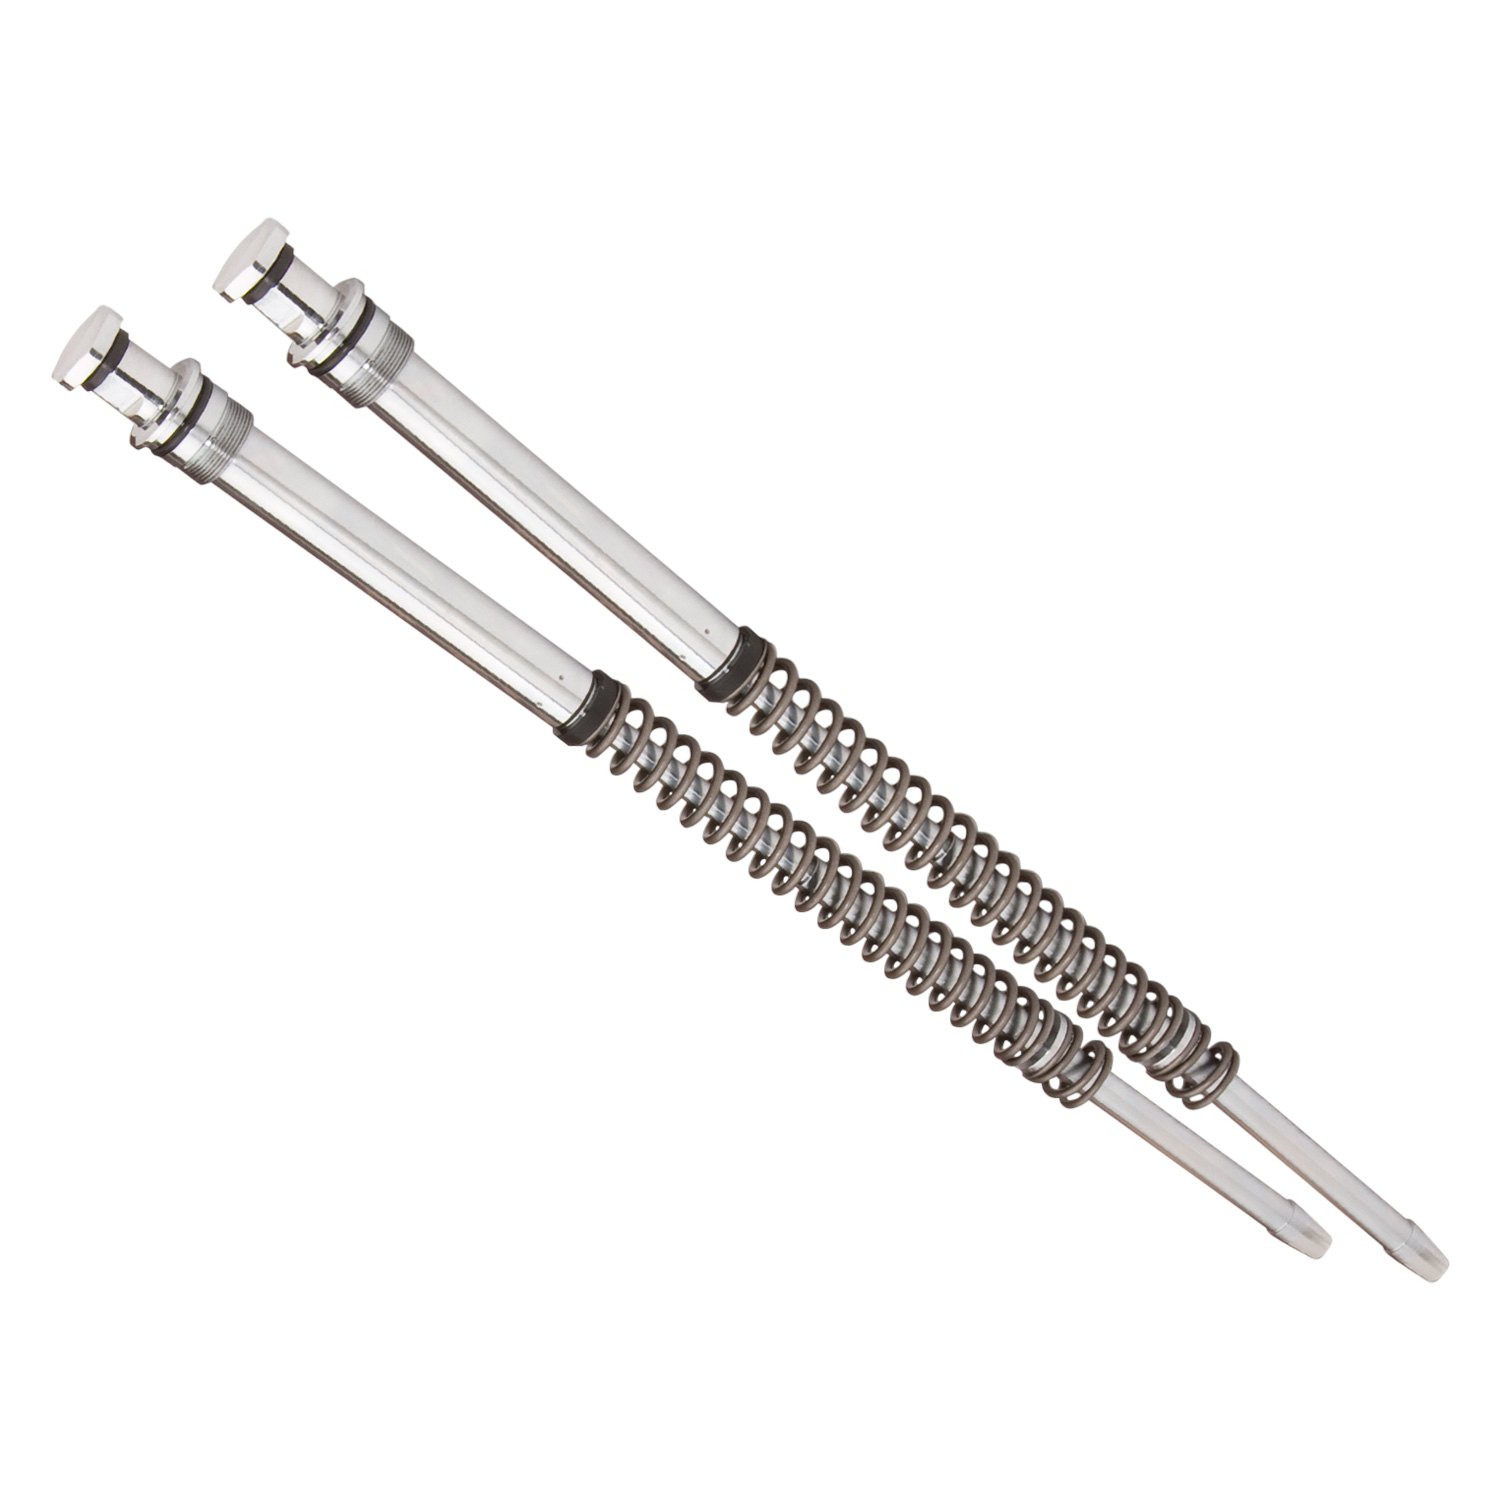 Progressive Suspension Monotube Fork Cartridge Lowering Kit 31-2509 